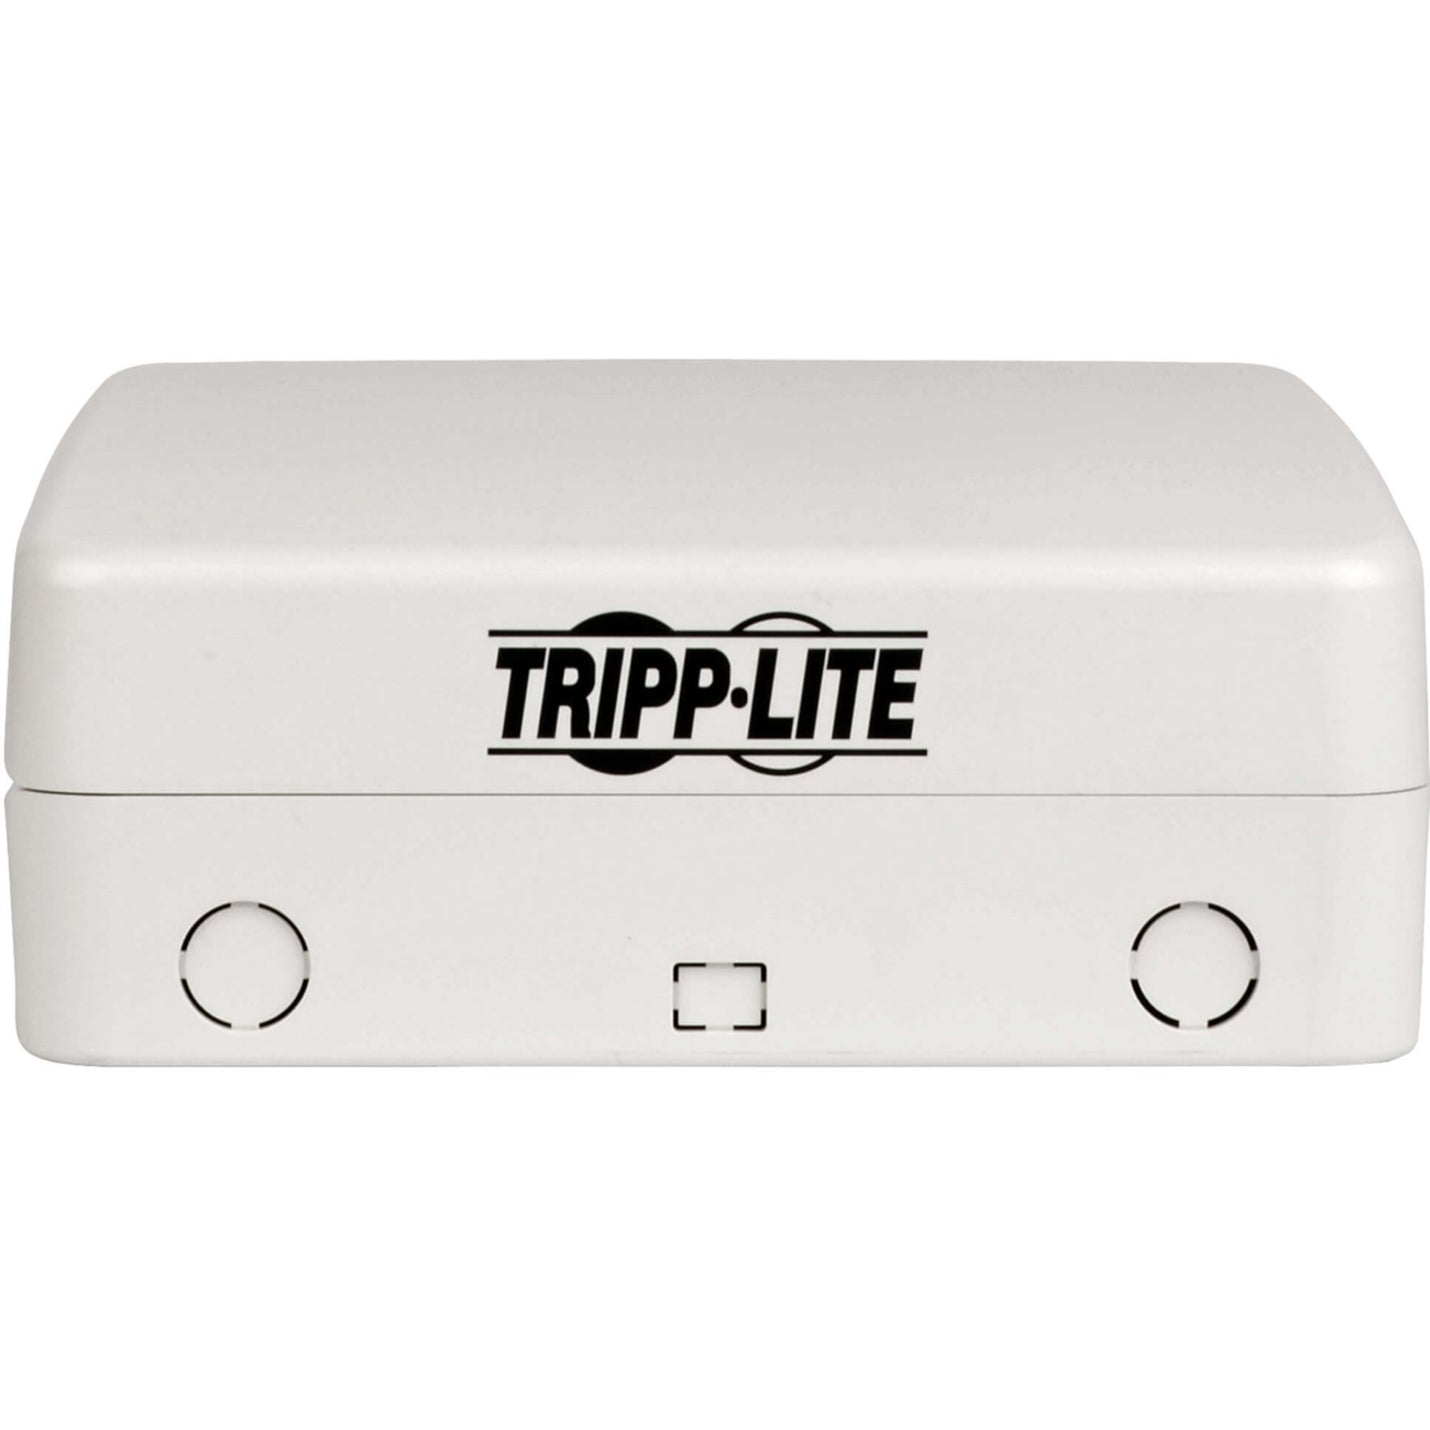 Tripp Lite EN1812 Wireless Access Point Enclosure with Lock, 18 x 12 in.